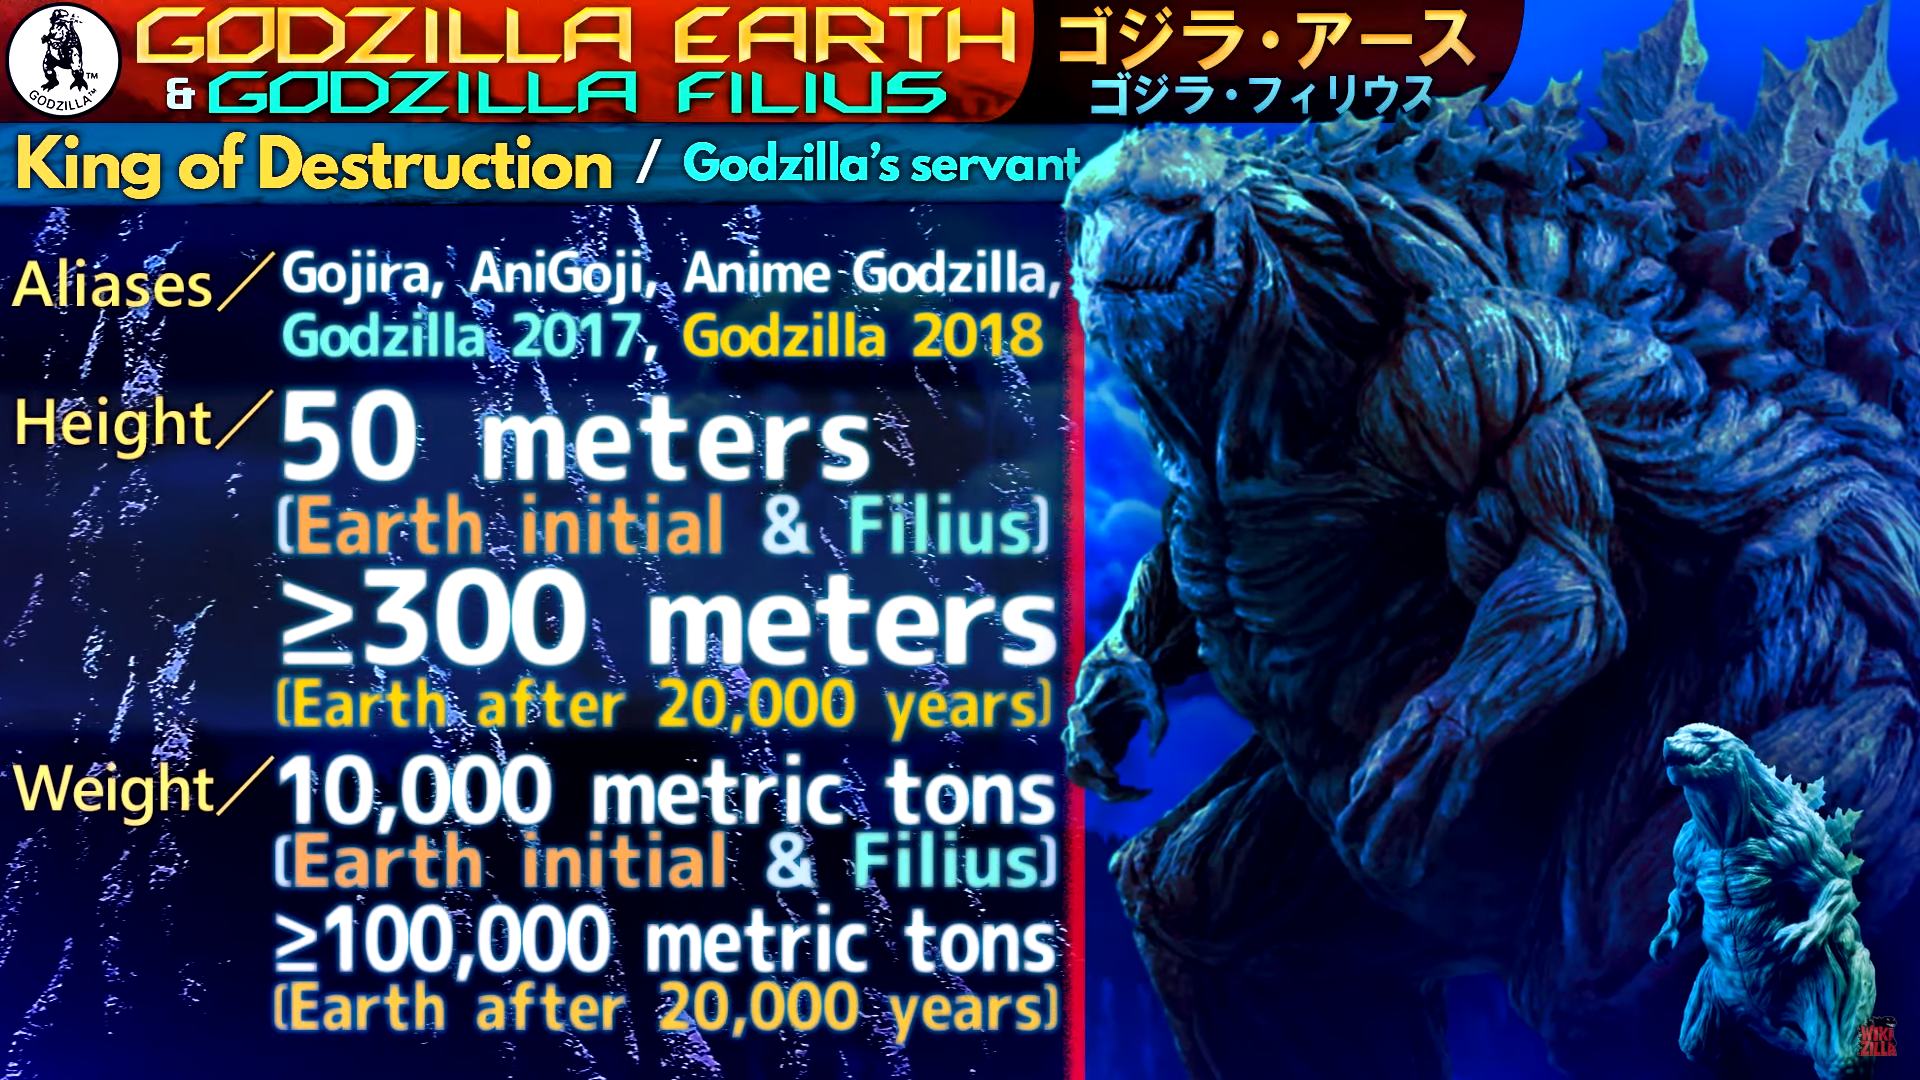 Quem é o Godzilla Earth? - ArquivoZilla 